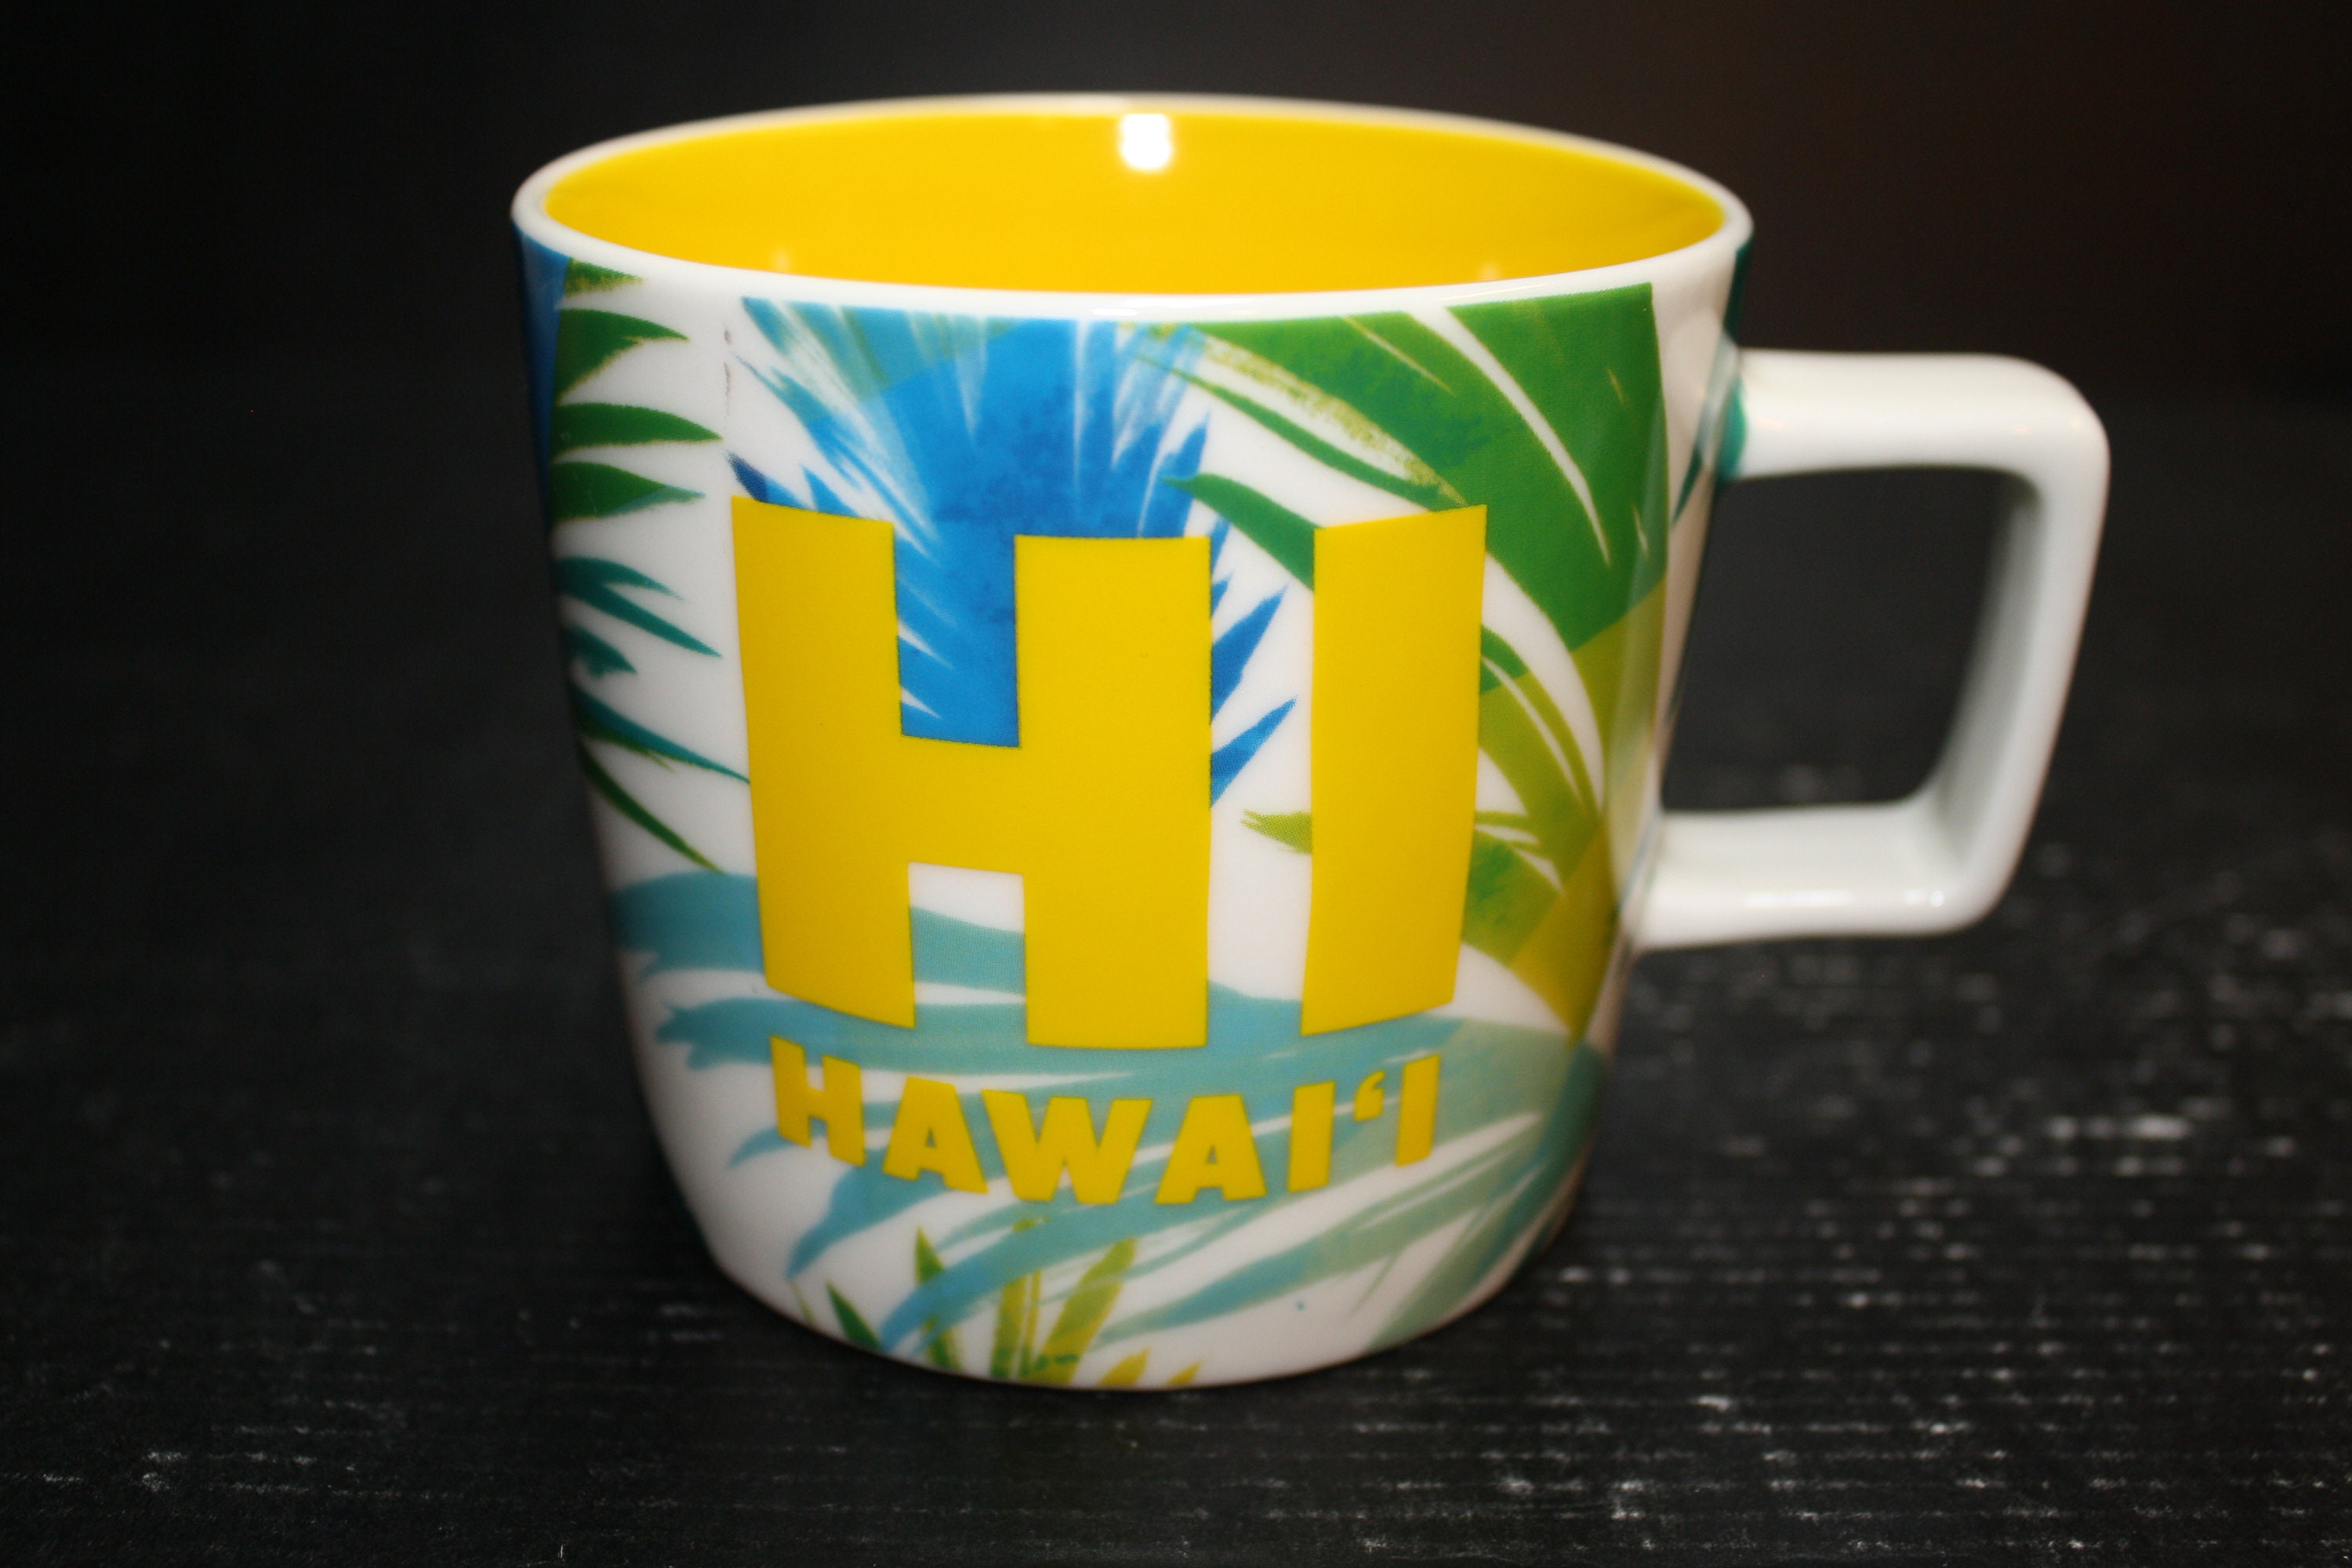 Starbucks HAWAII merchandise  mug, Starbucks, coffee, Oahu